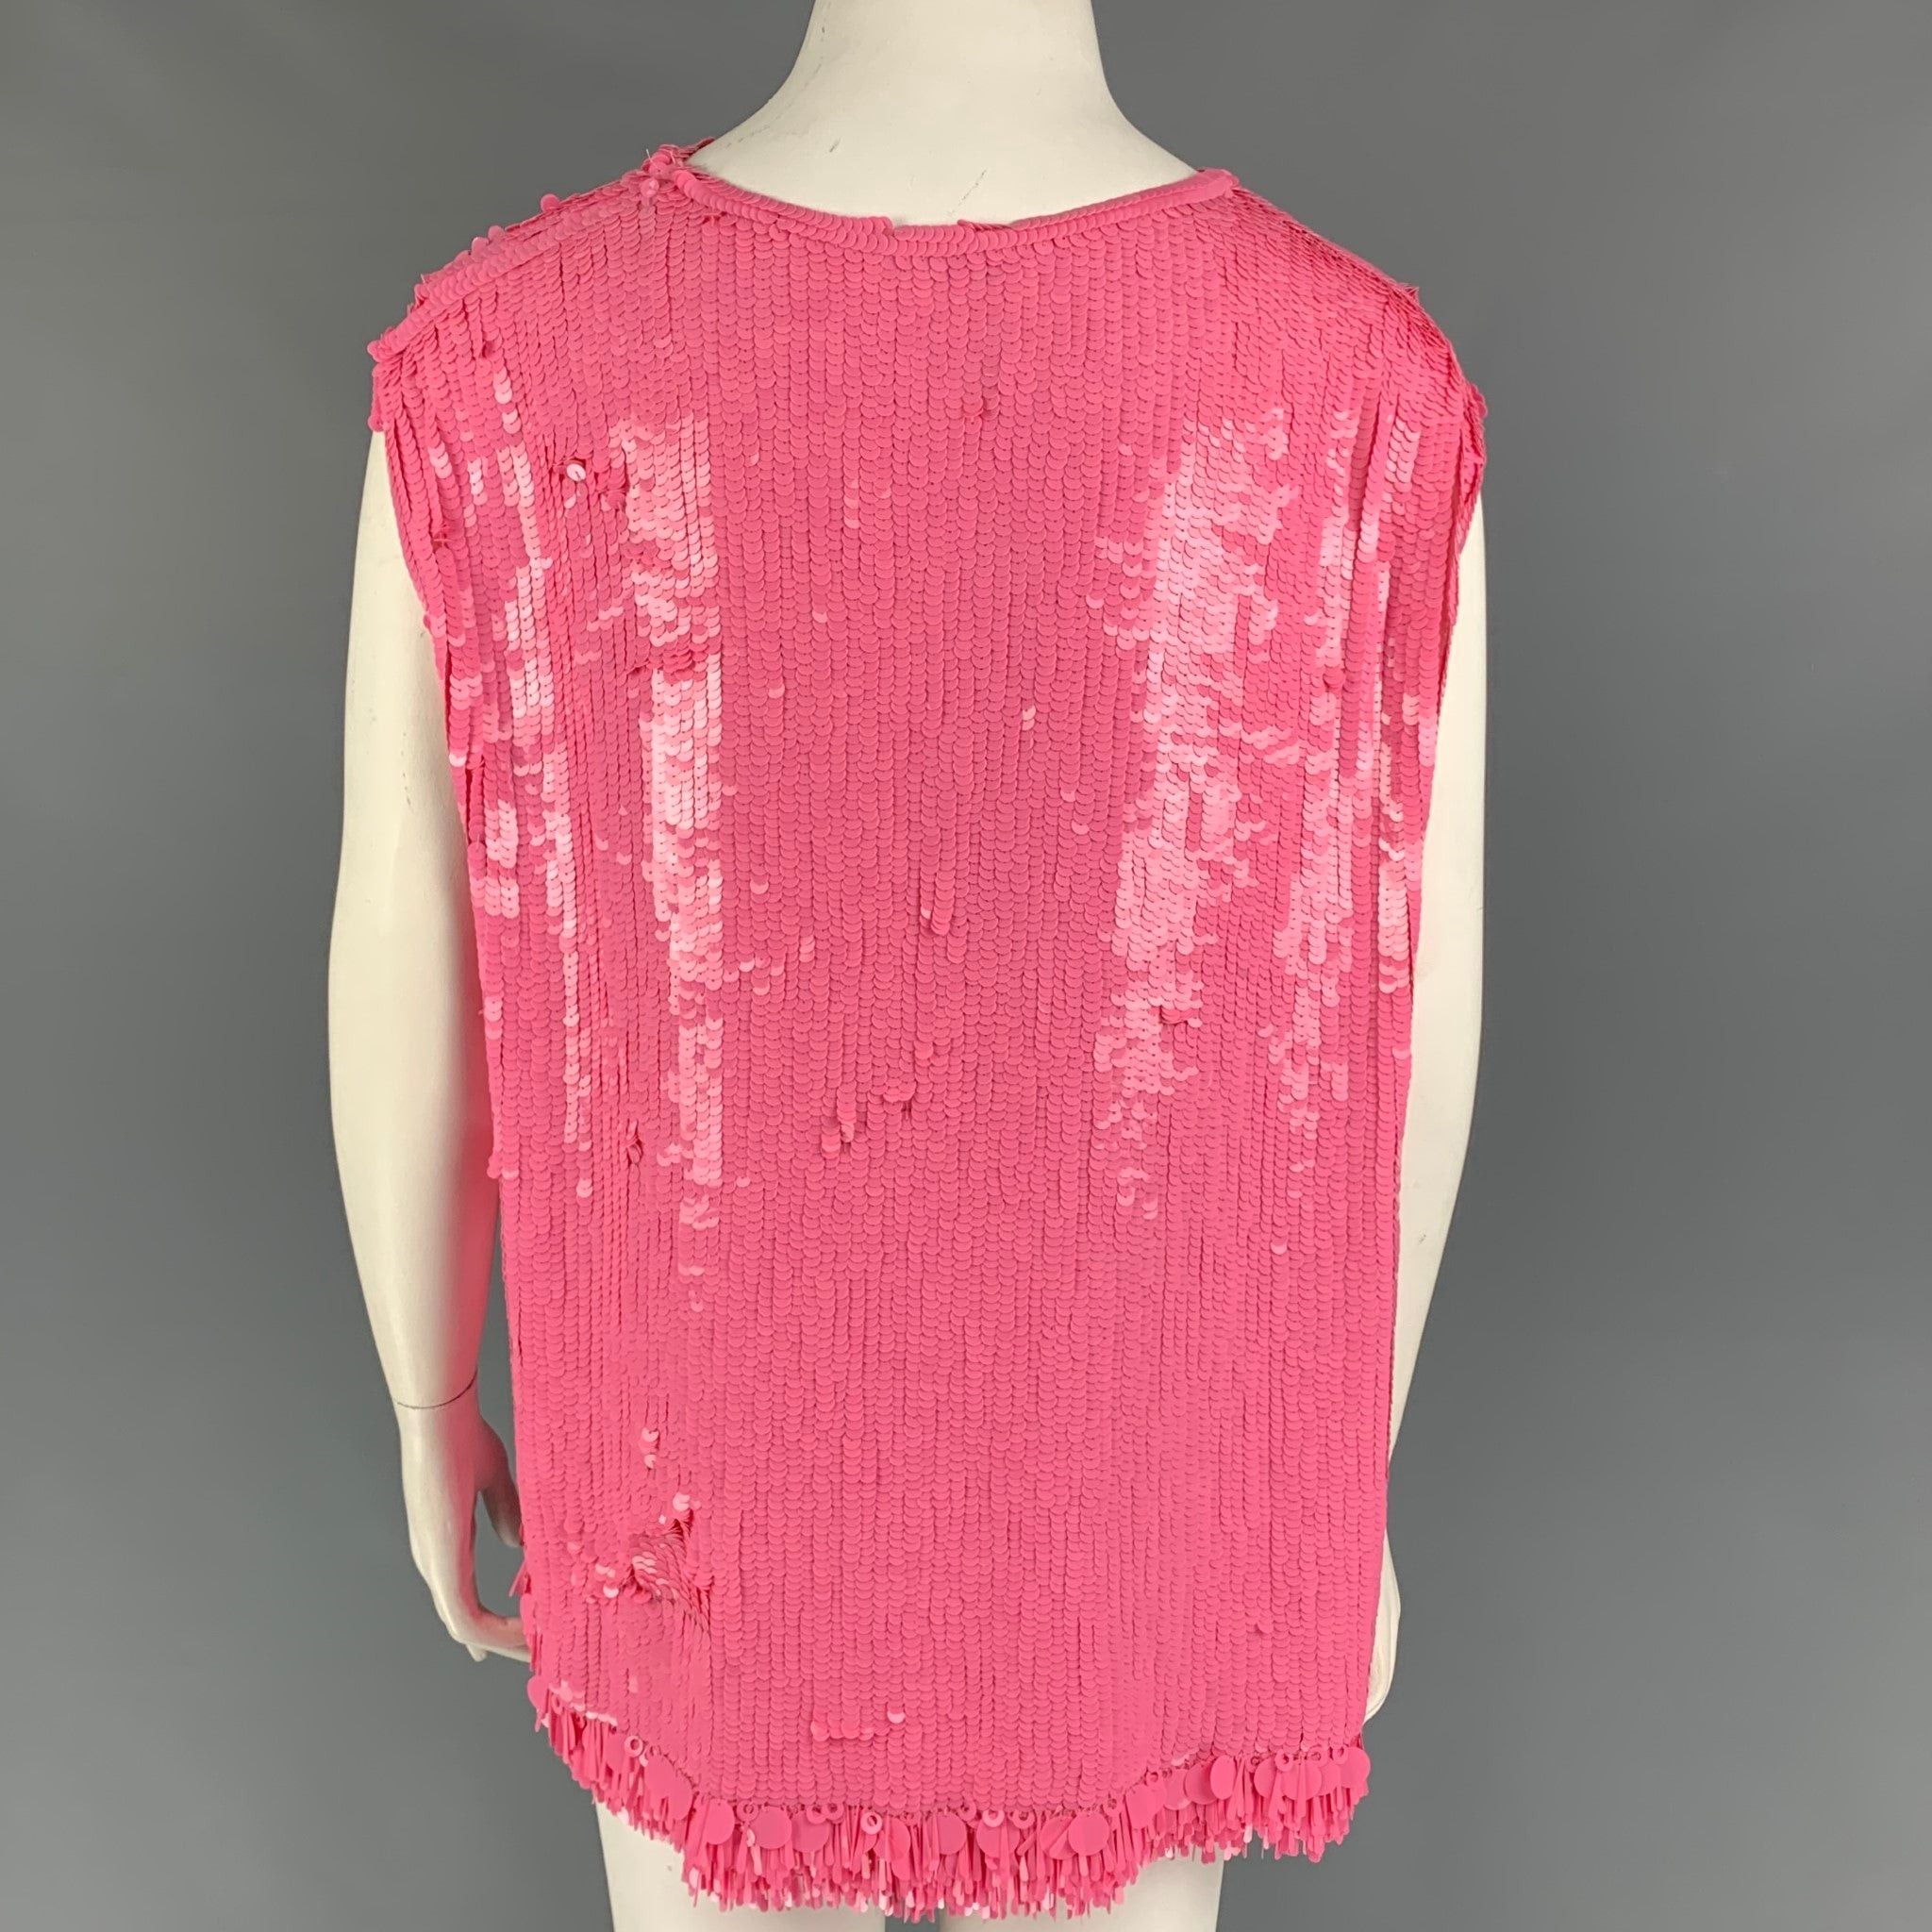 Dries Van Noten FW 21 Pink Viscose Sequined Sleeveless Dress Top Size L / US 10 / IT 46 - 3 Thumbnail